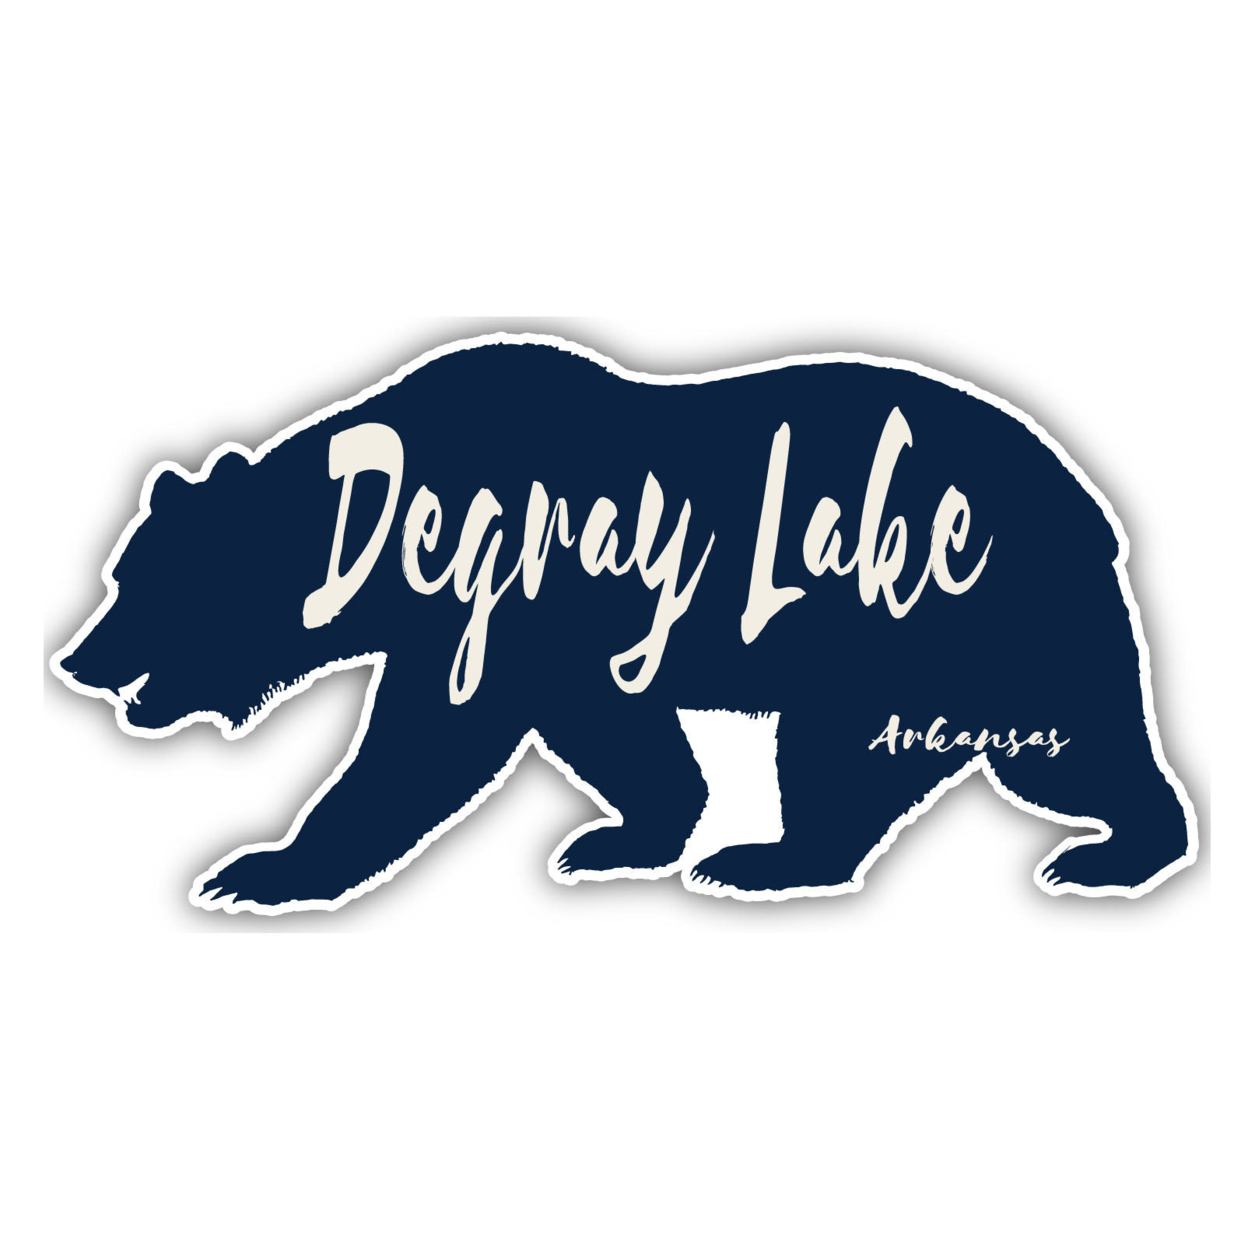 DeGray Lake Arkansas Souvenir Decorative Stickers (Choose Theme And Size) - Single Unit, 10-Inch, Tent